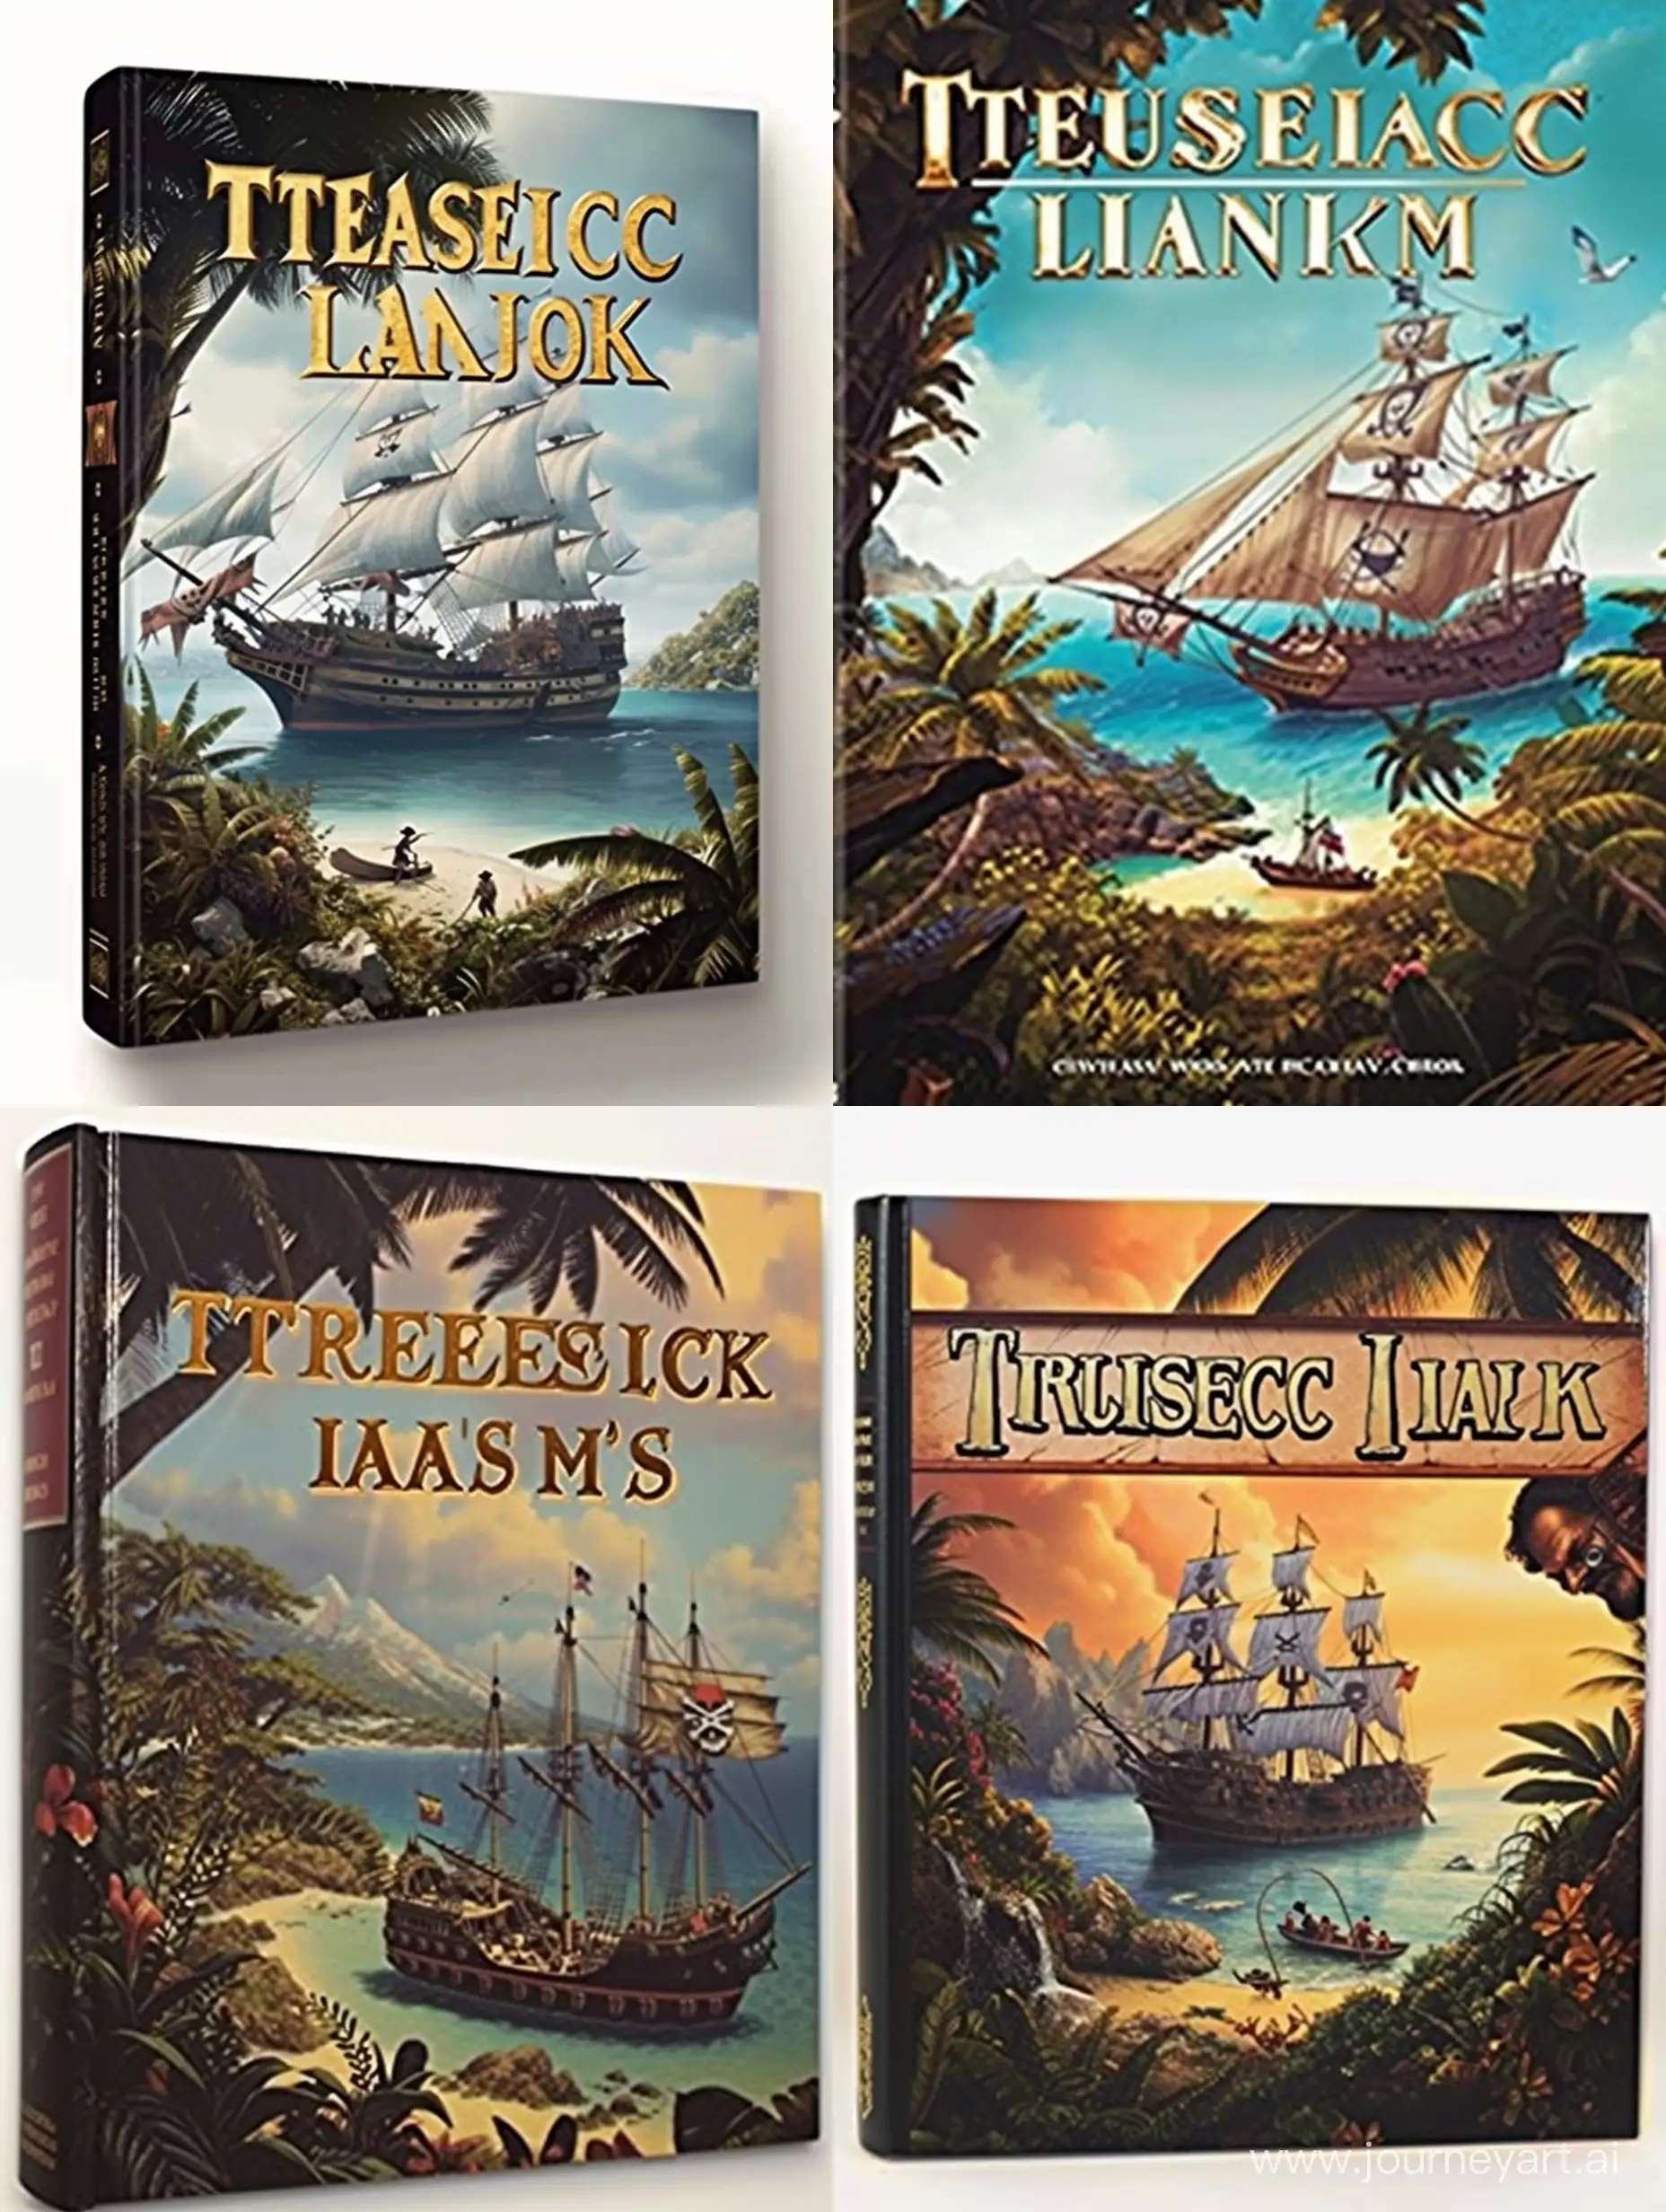 Pirate-Ship-Adventure-Treasure-Island-Book-Cover-in-a-Tropical-Bay